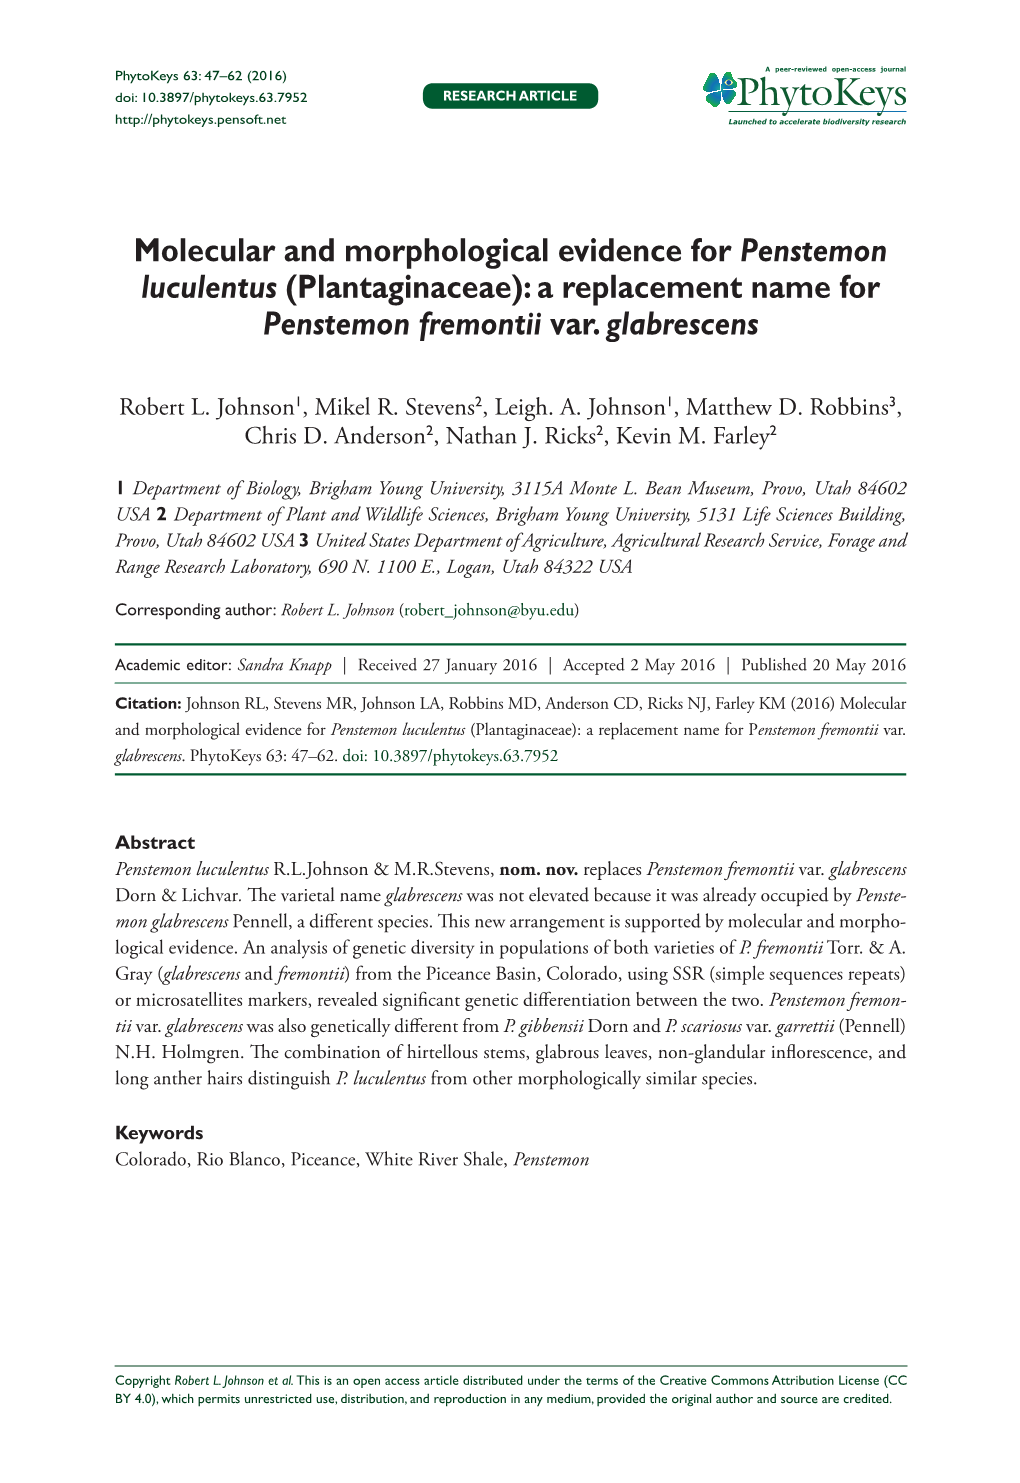 Molecular and Morphological Evidence for Penstemon Luculentus (Plantaginaceae): a Replacement Name for Penstemon Fremontii Var